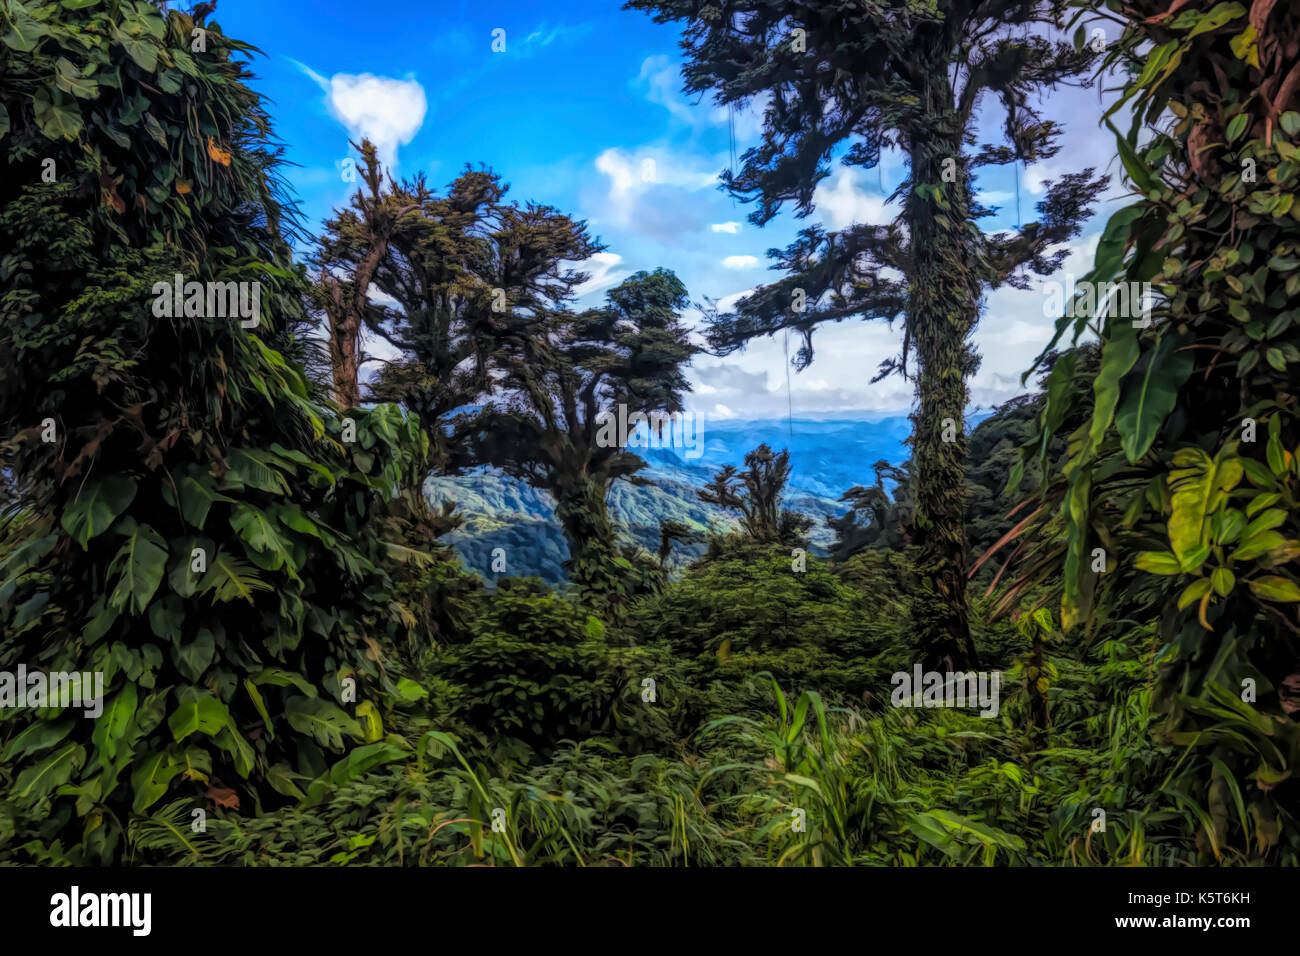 Rain forest landscape scene illustration Stock Photo